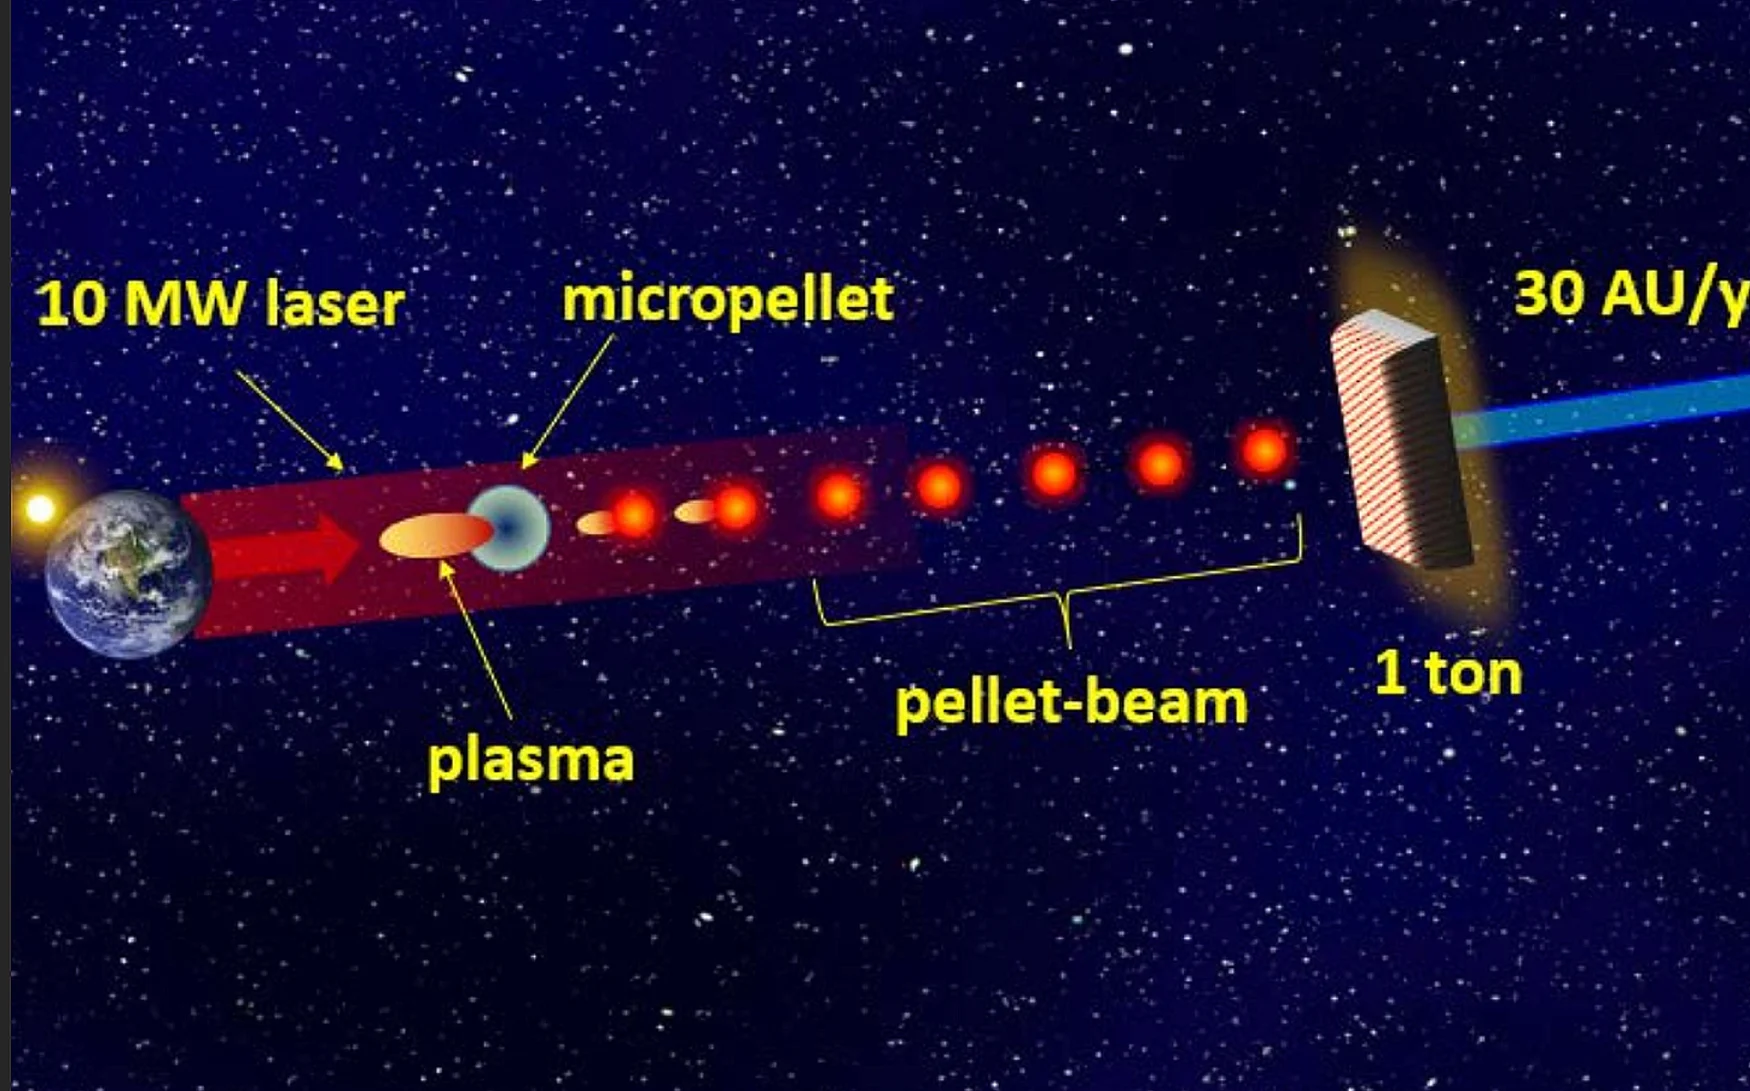 Pellet-beam spacecraft propulsion concept